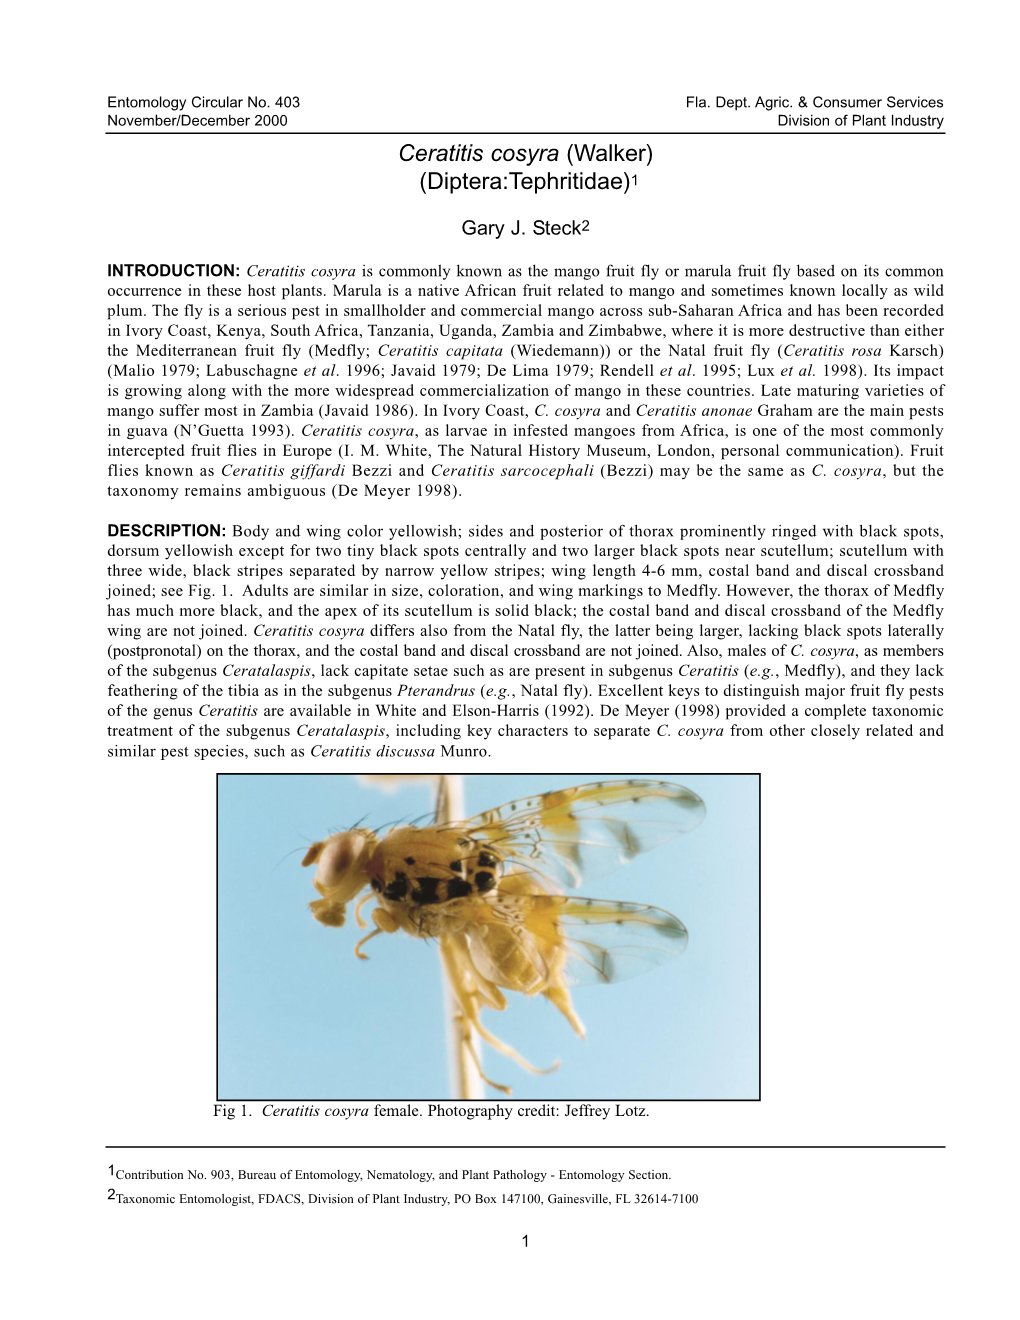 Ceratitis Cosyra (Walker) (Diptera:Tephritidae)1